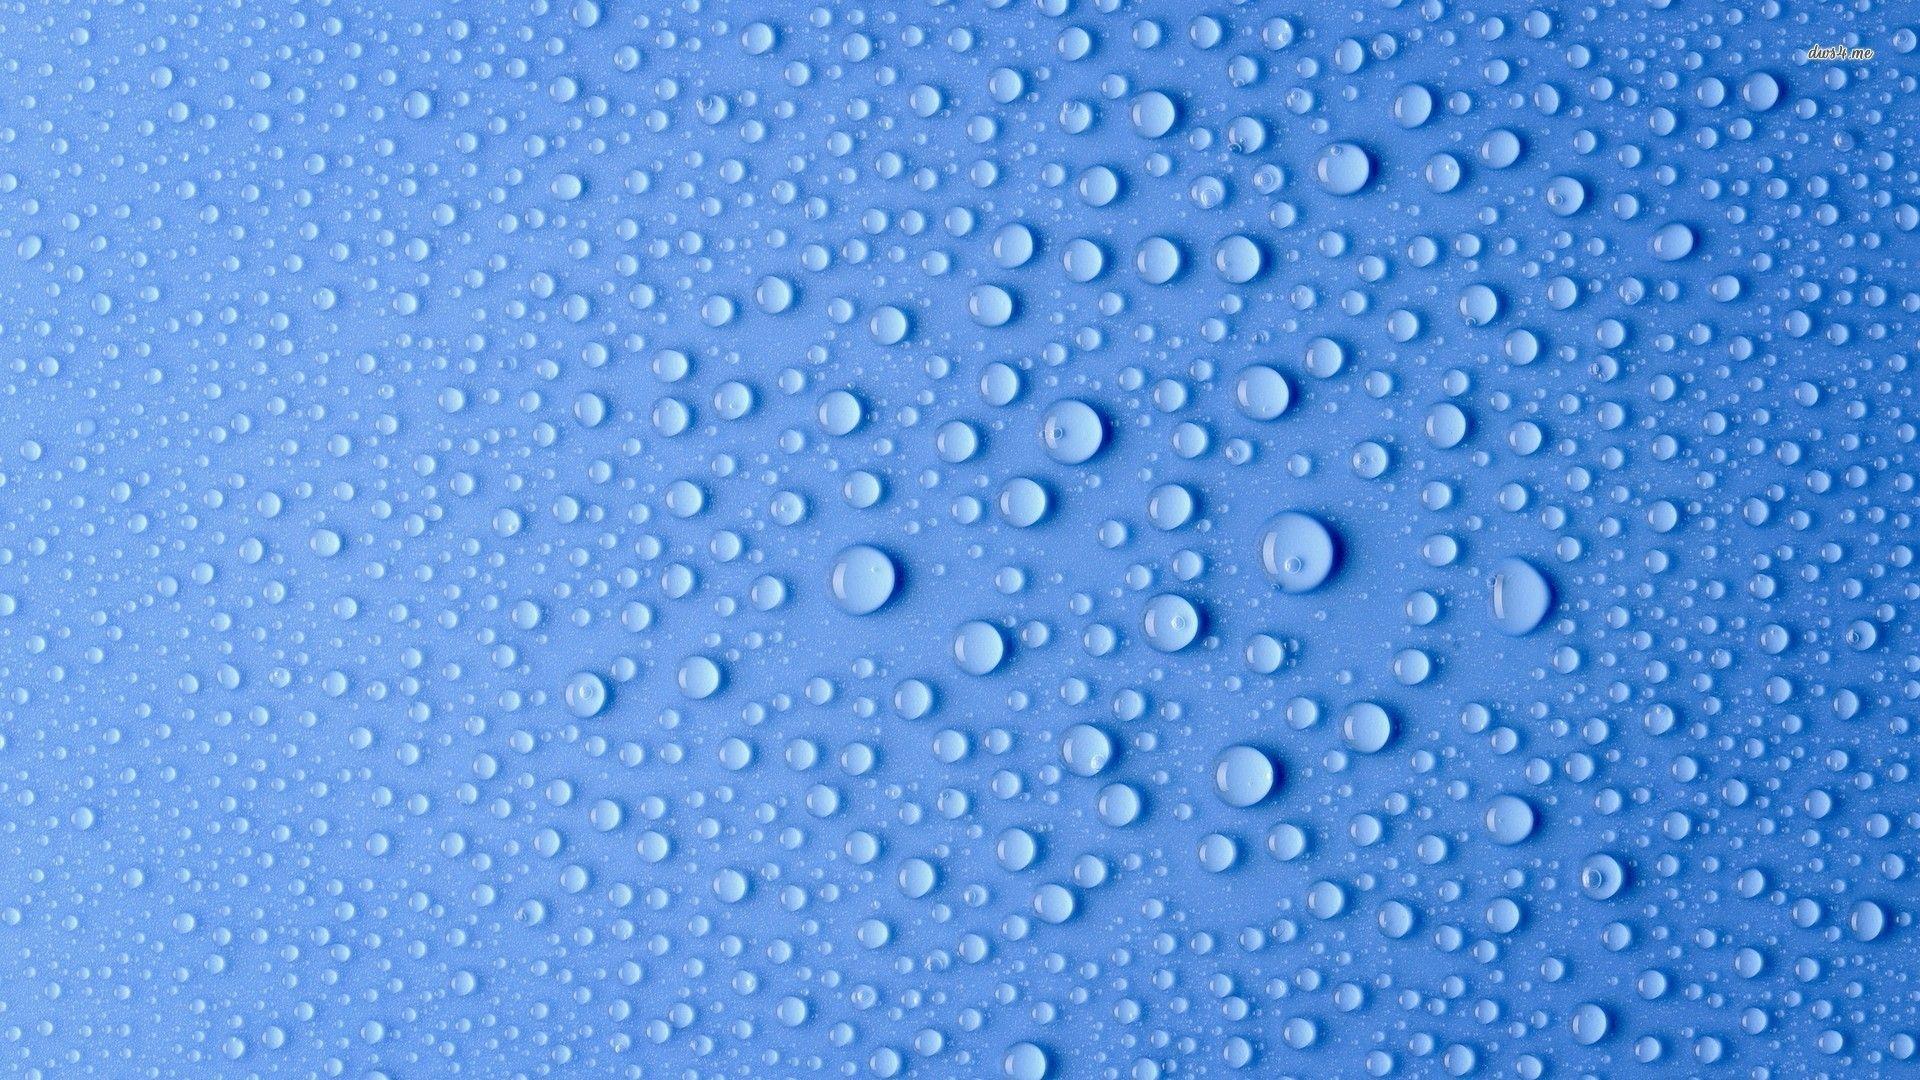 Beautiful Wallpaper Of Water Drops